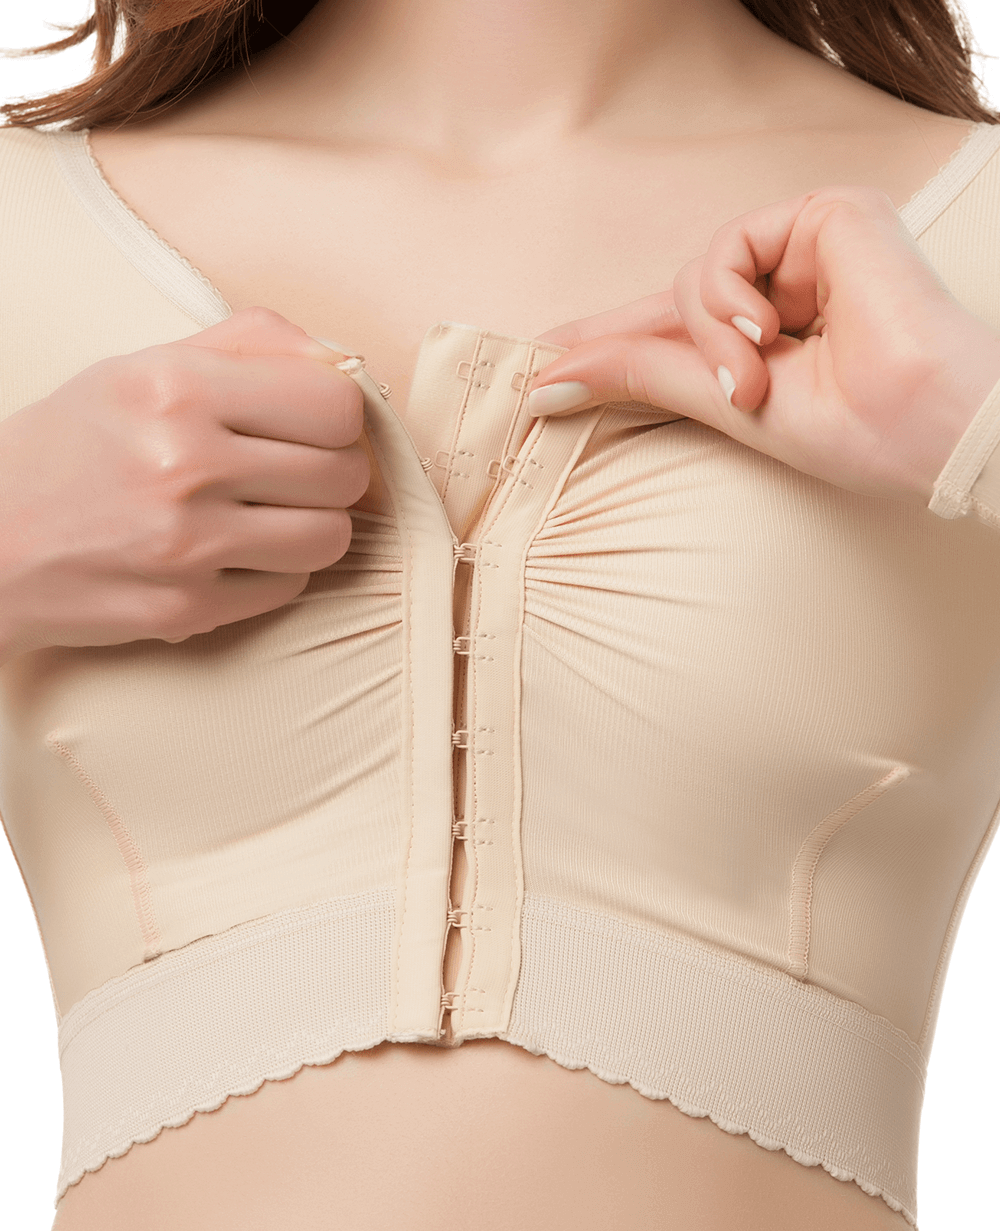 AIBOLO Underoutfit Bras for Women, Beaded Modeling Suspender Vest